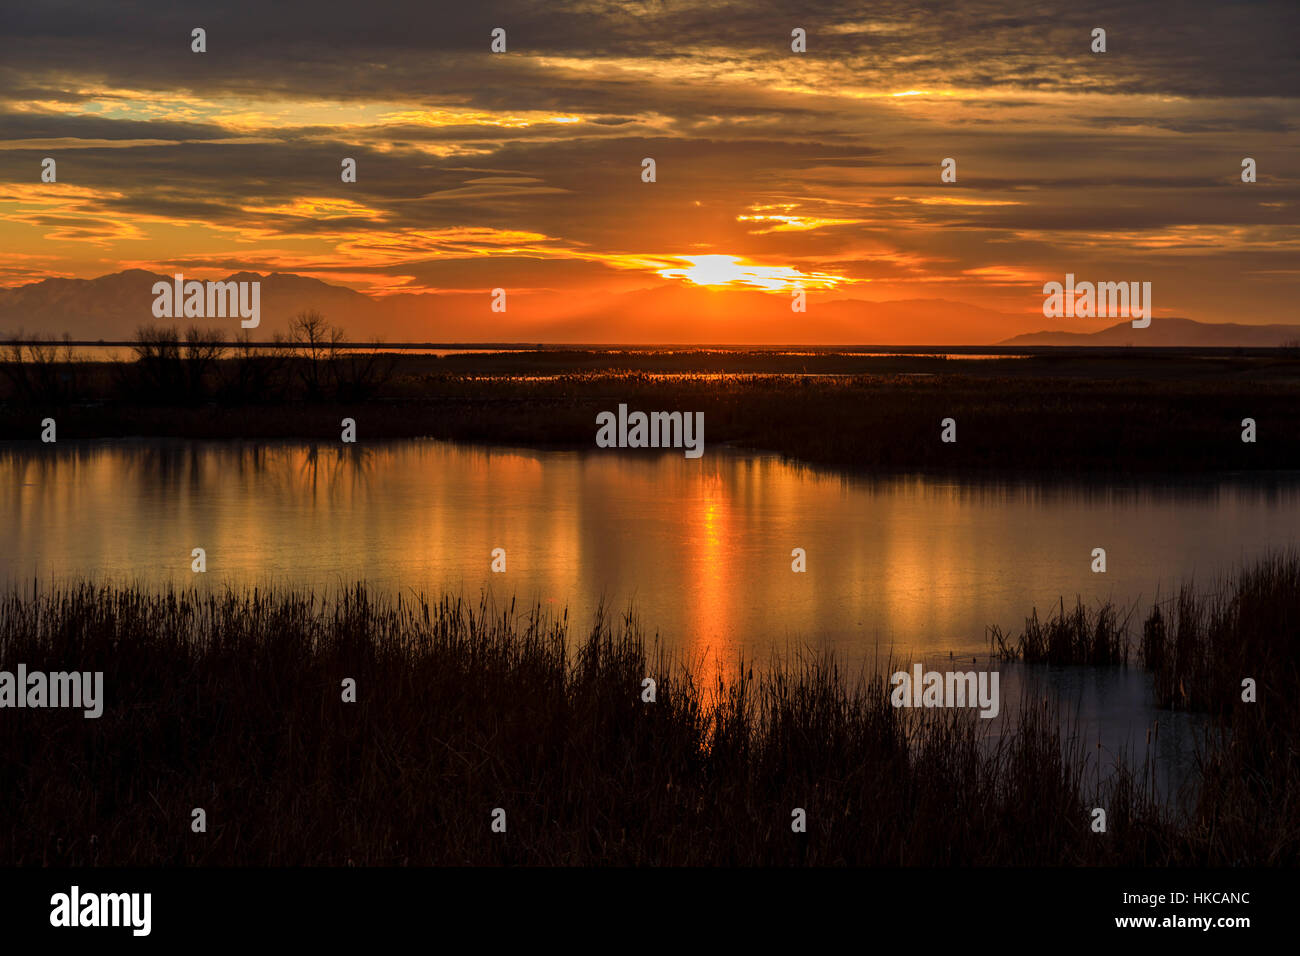 The setting sun reflects on one of the ponds in the Farmington Bay Waterfowl Management Area near Farmington, Utah, USA. Stock Photo